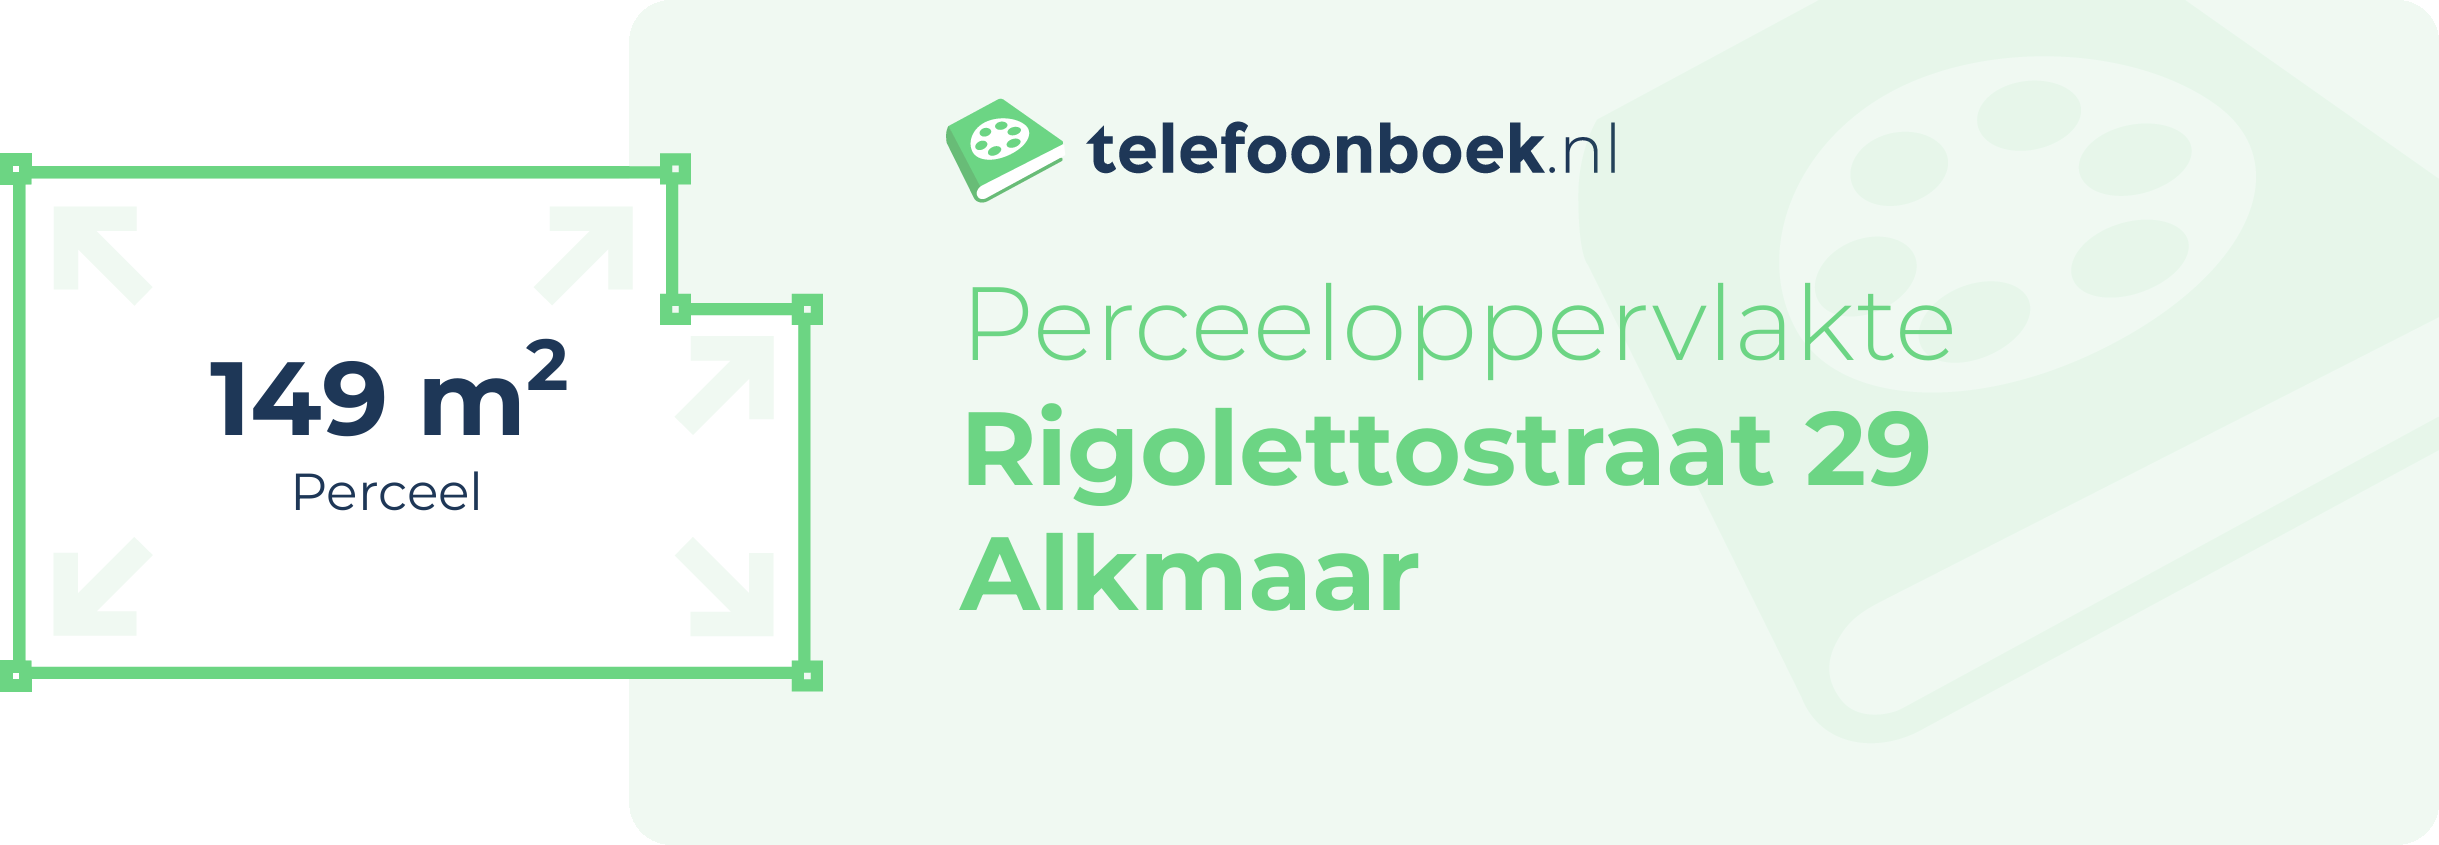 Perceeloppervlakte Rigolettostraat 29 Alkmaar